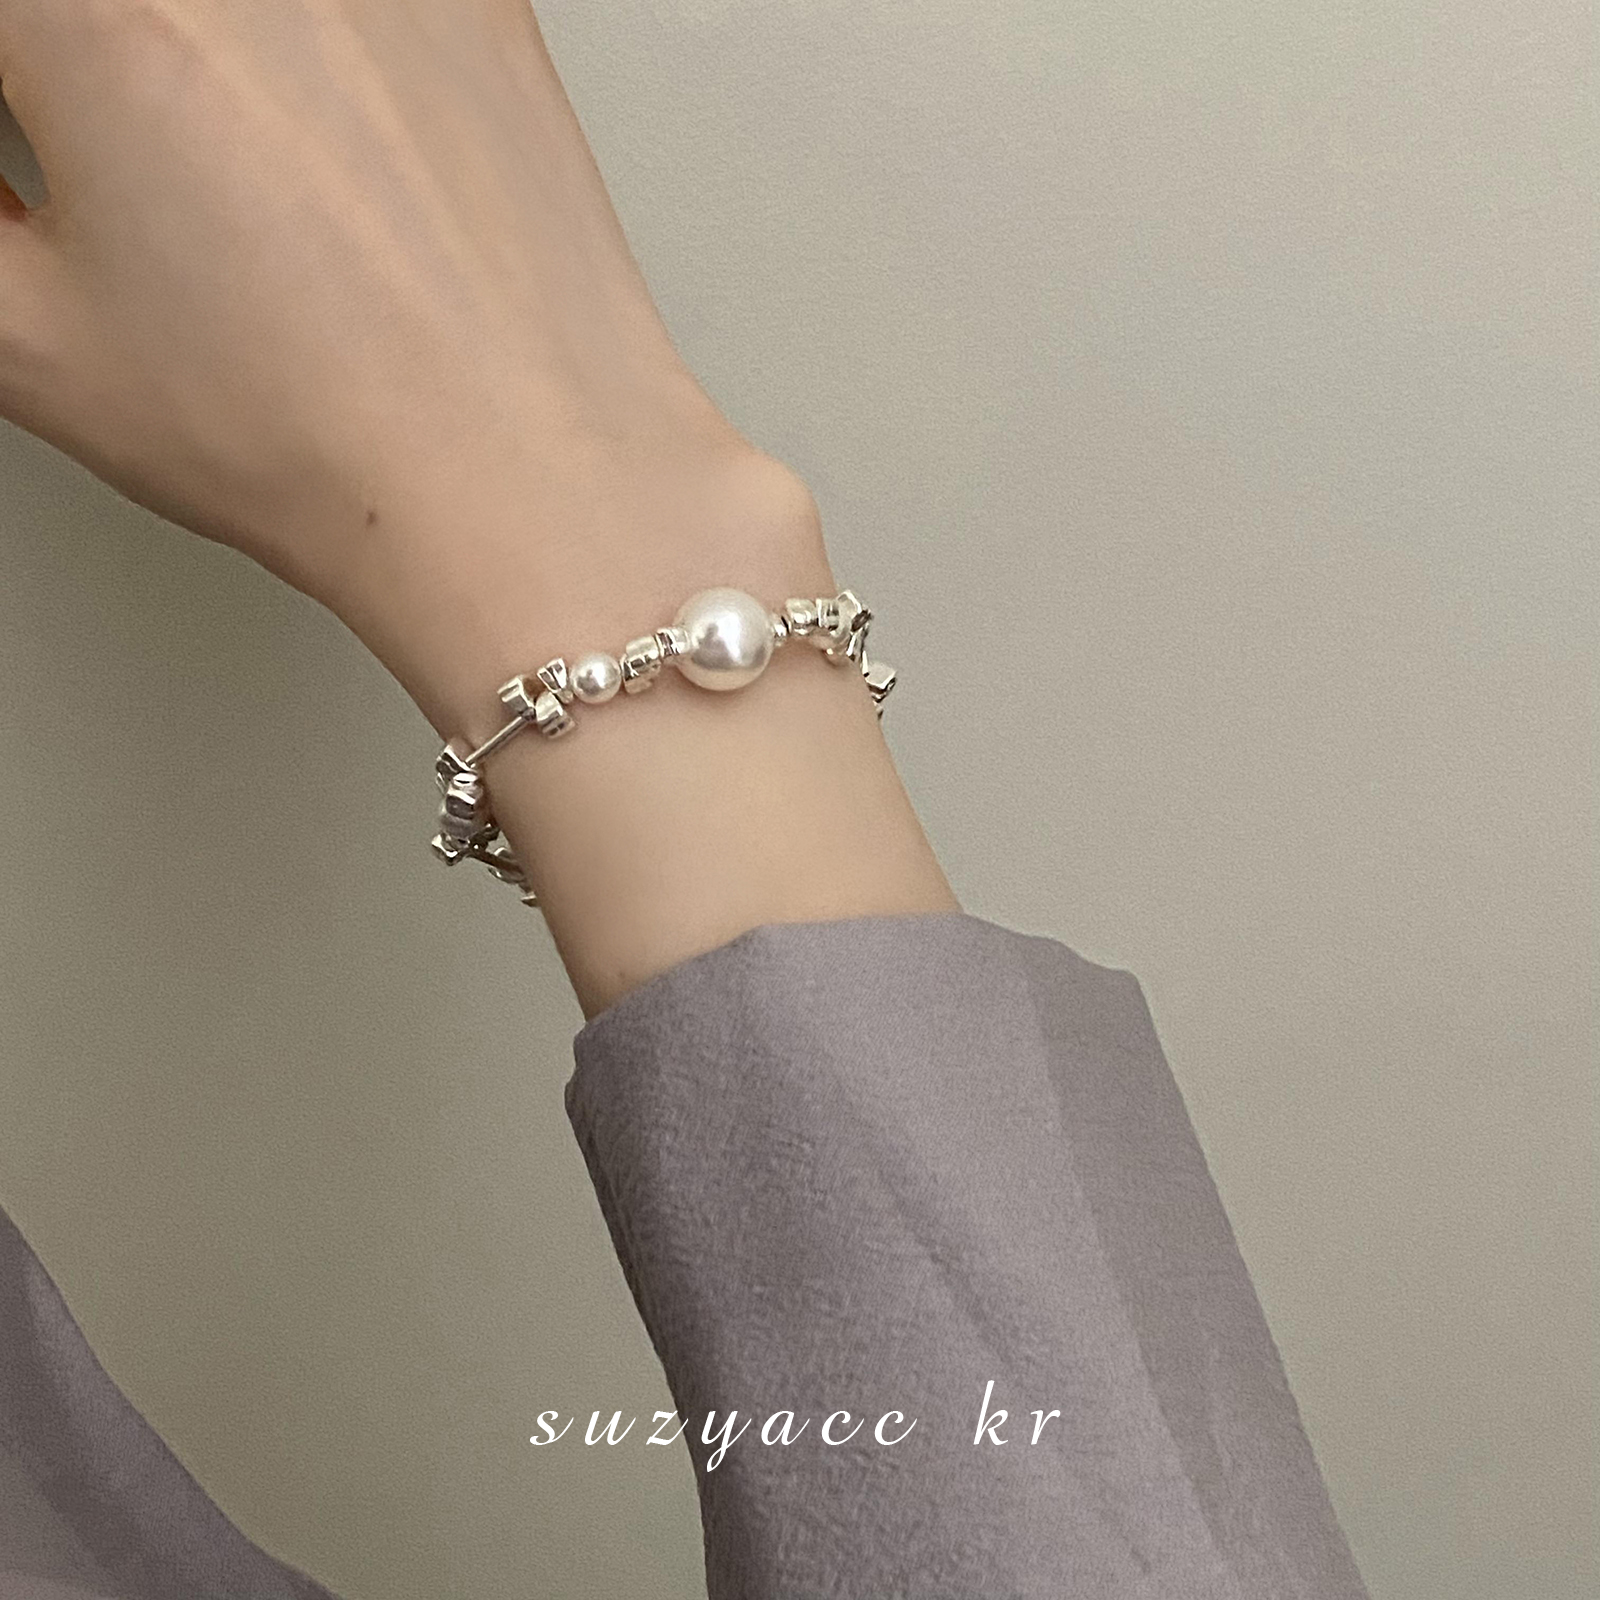 suzyacc kr小众设计款碎银珍珠手链2022年新款ins风女生串珠手饰